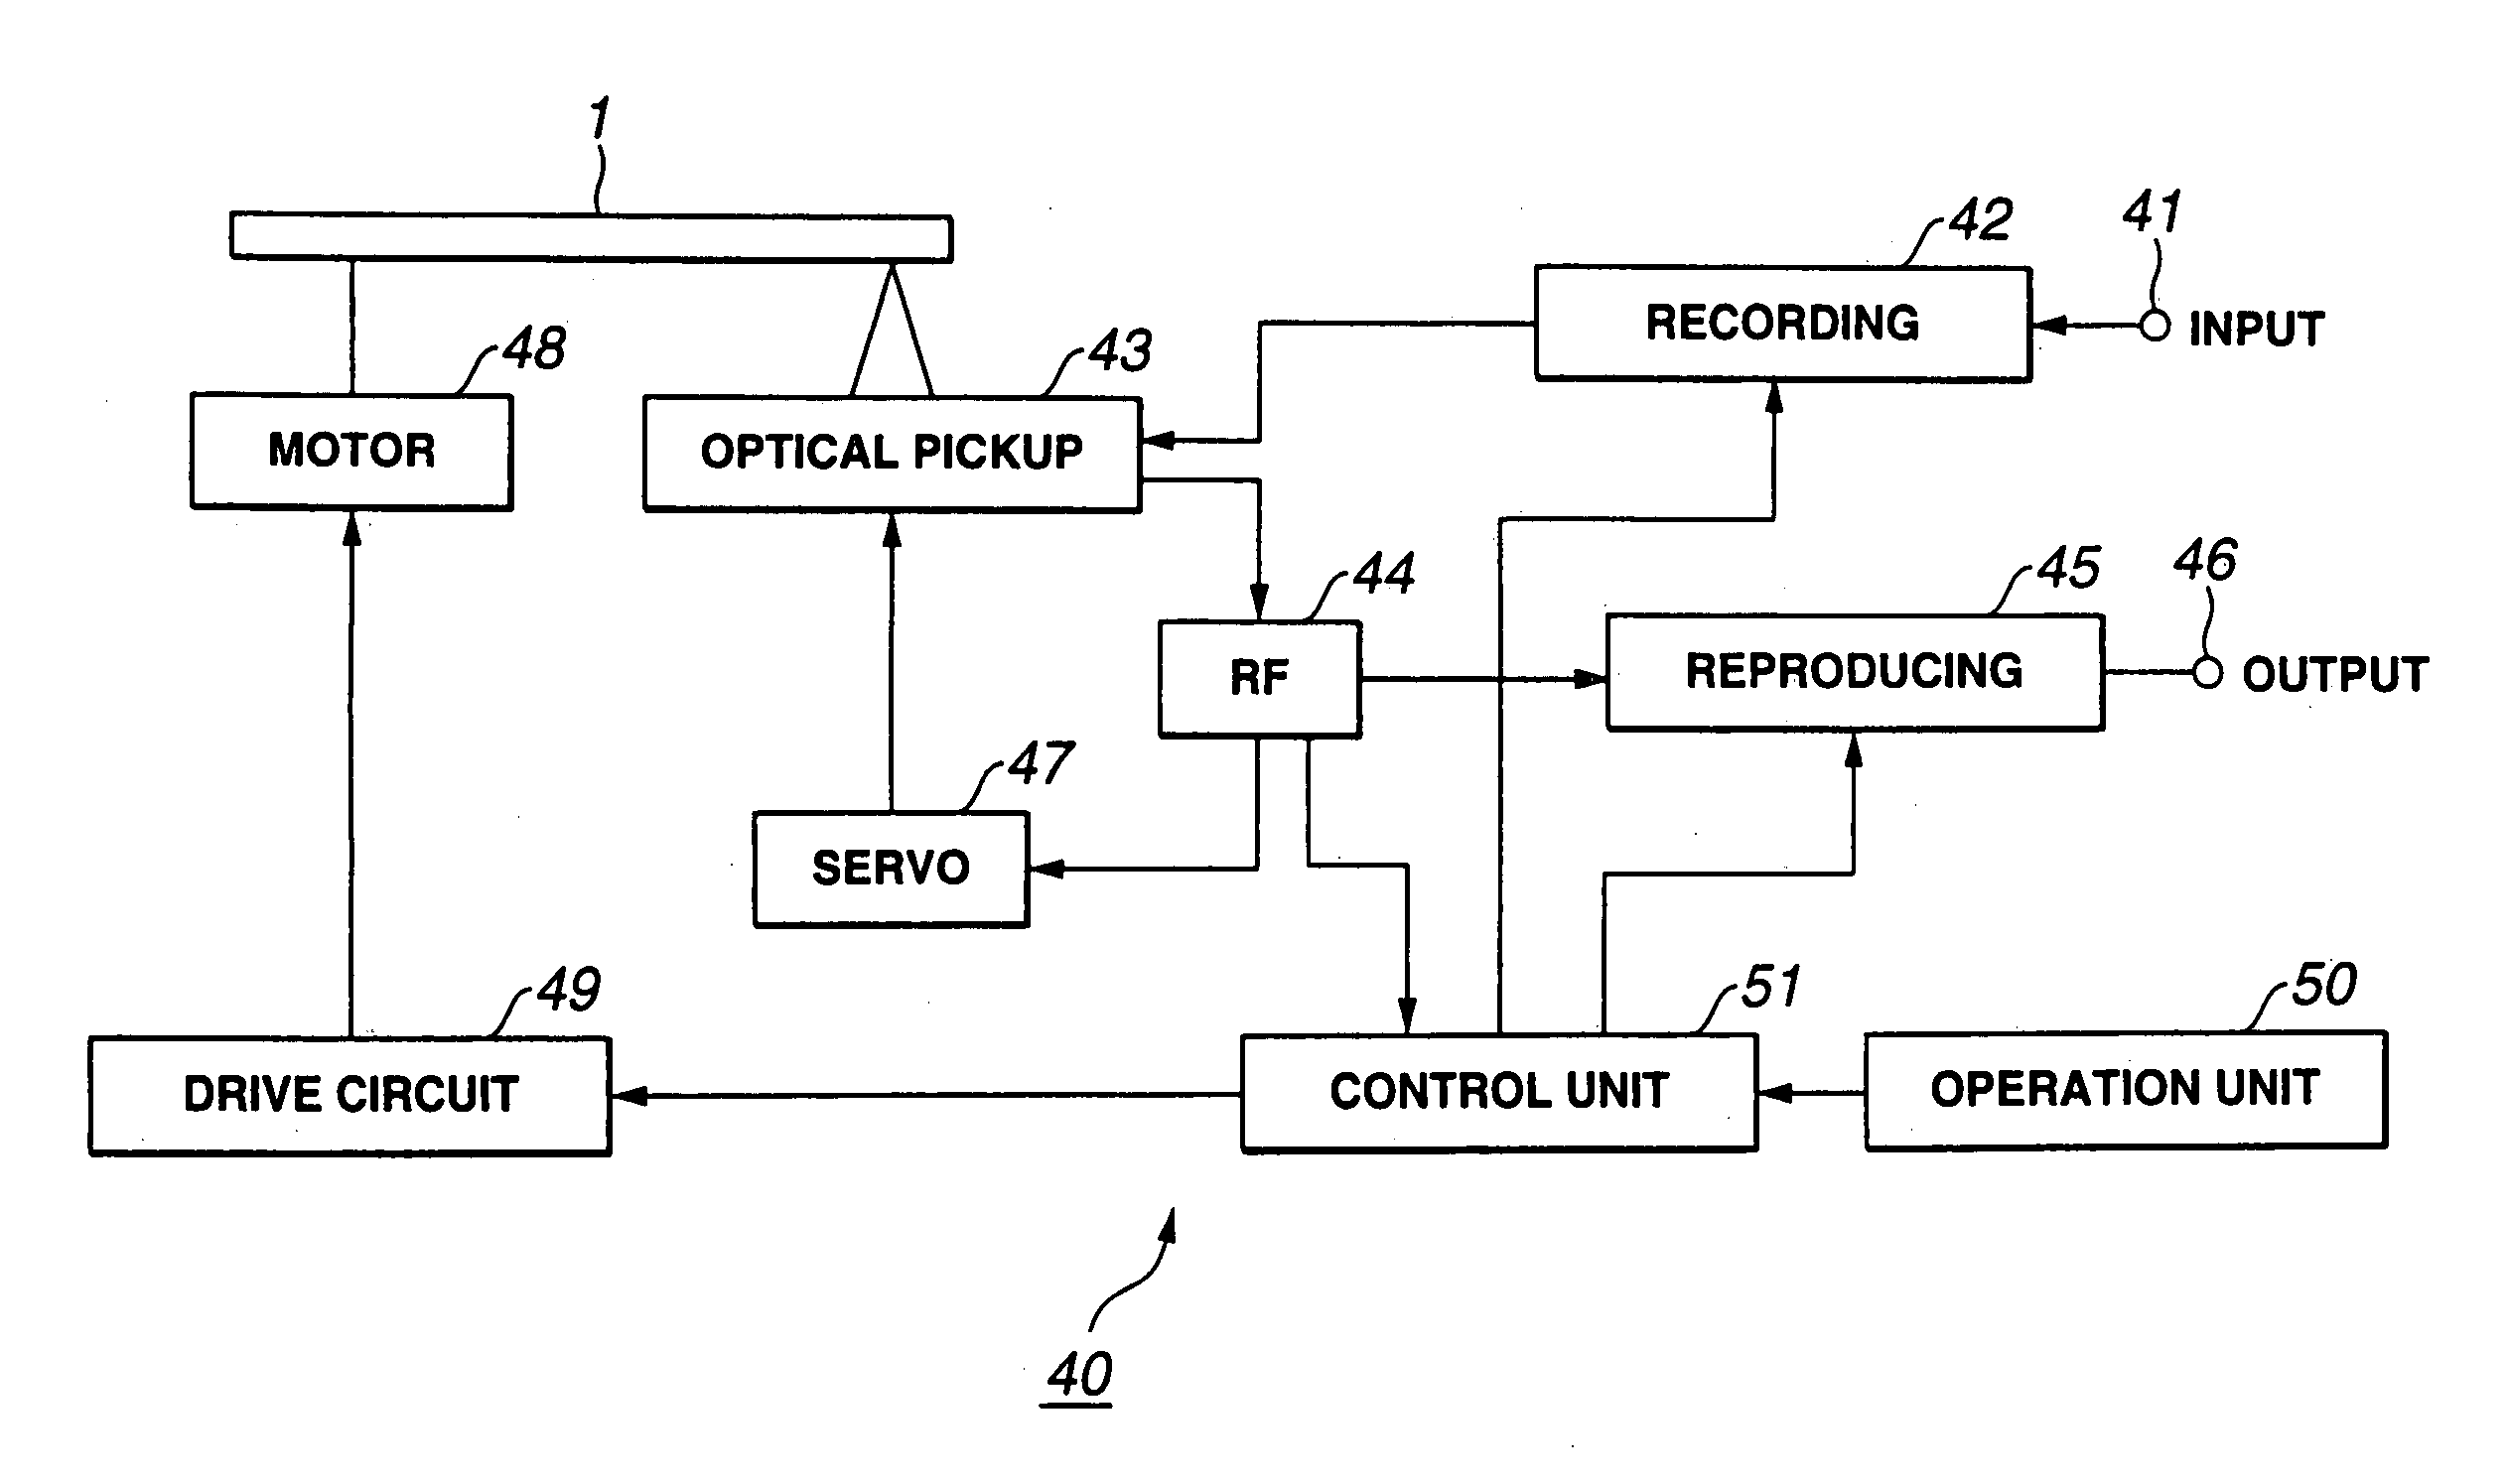 Optical disc, optical disc recording apparatus and method, optical disc reproducing method